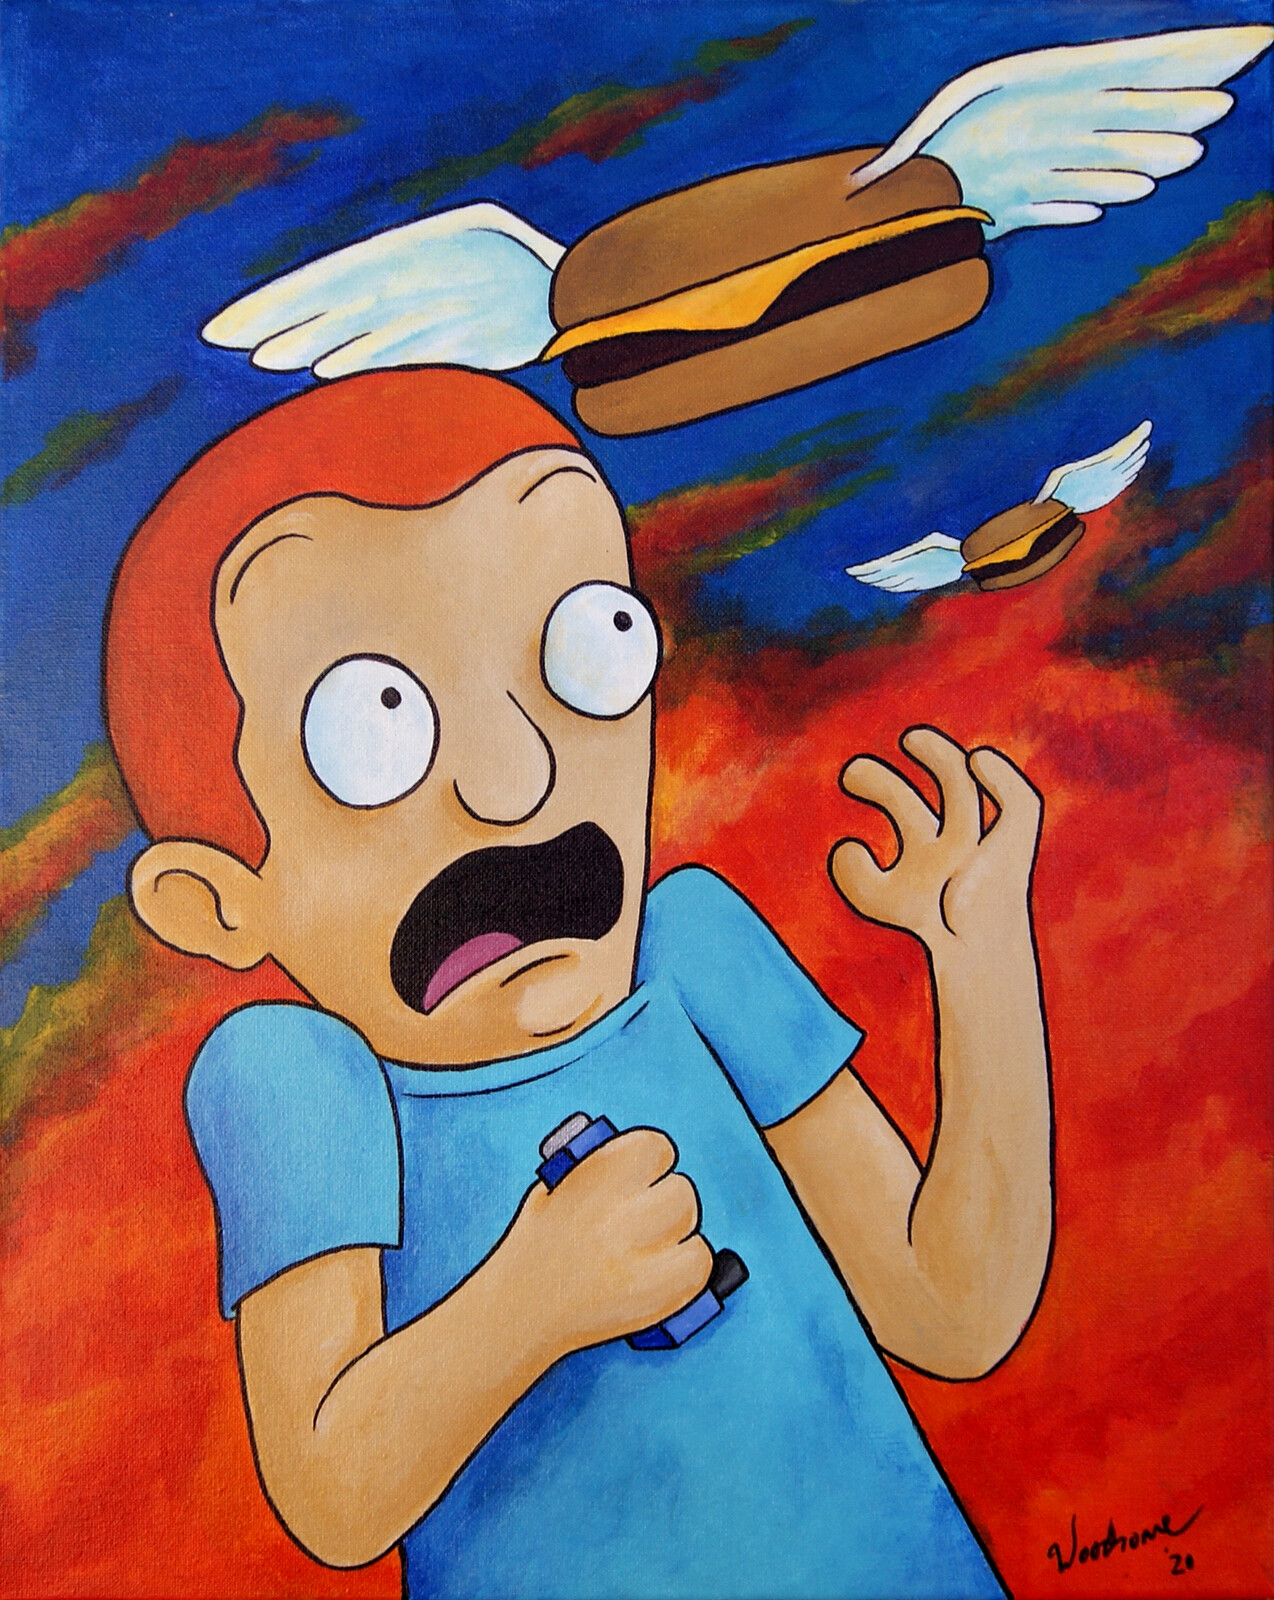 Regular Sized Rudy, Bob's Burgers fan art